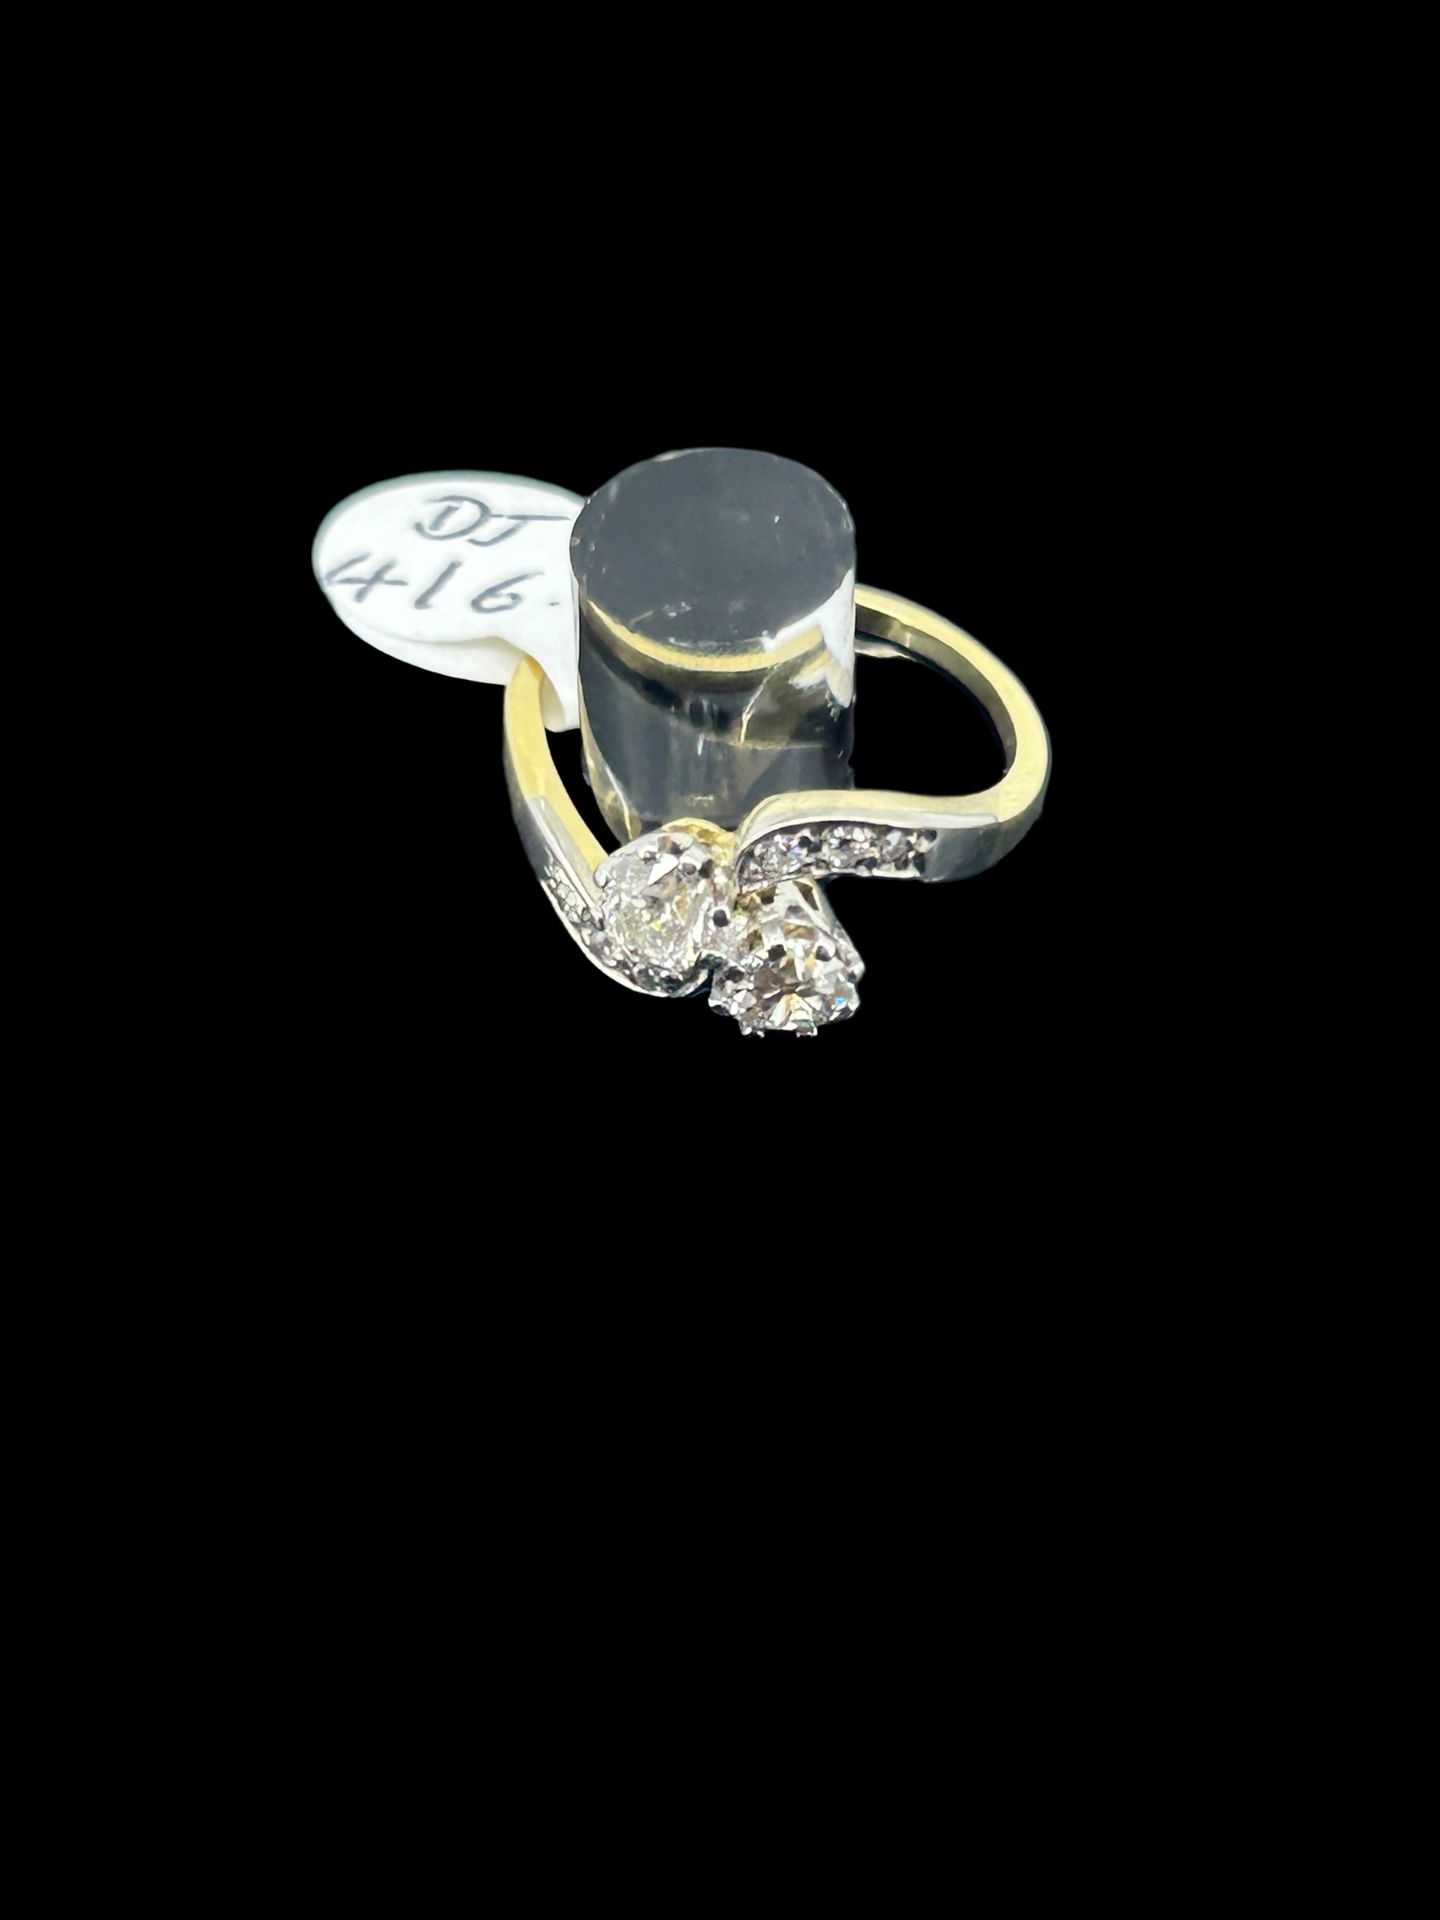 18k yellow gold ring, set with 2 x 0.35 carat diamonds